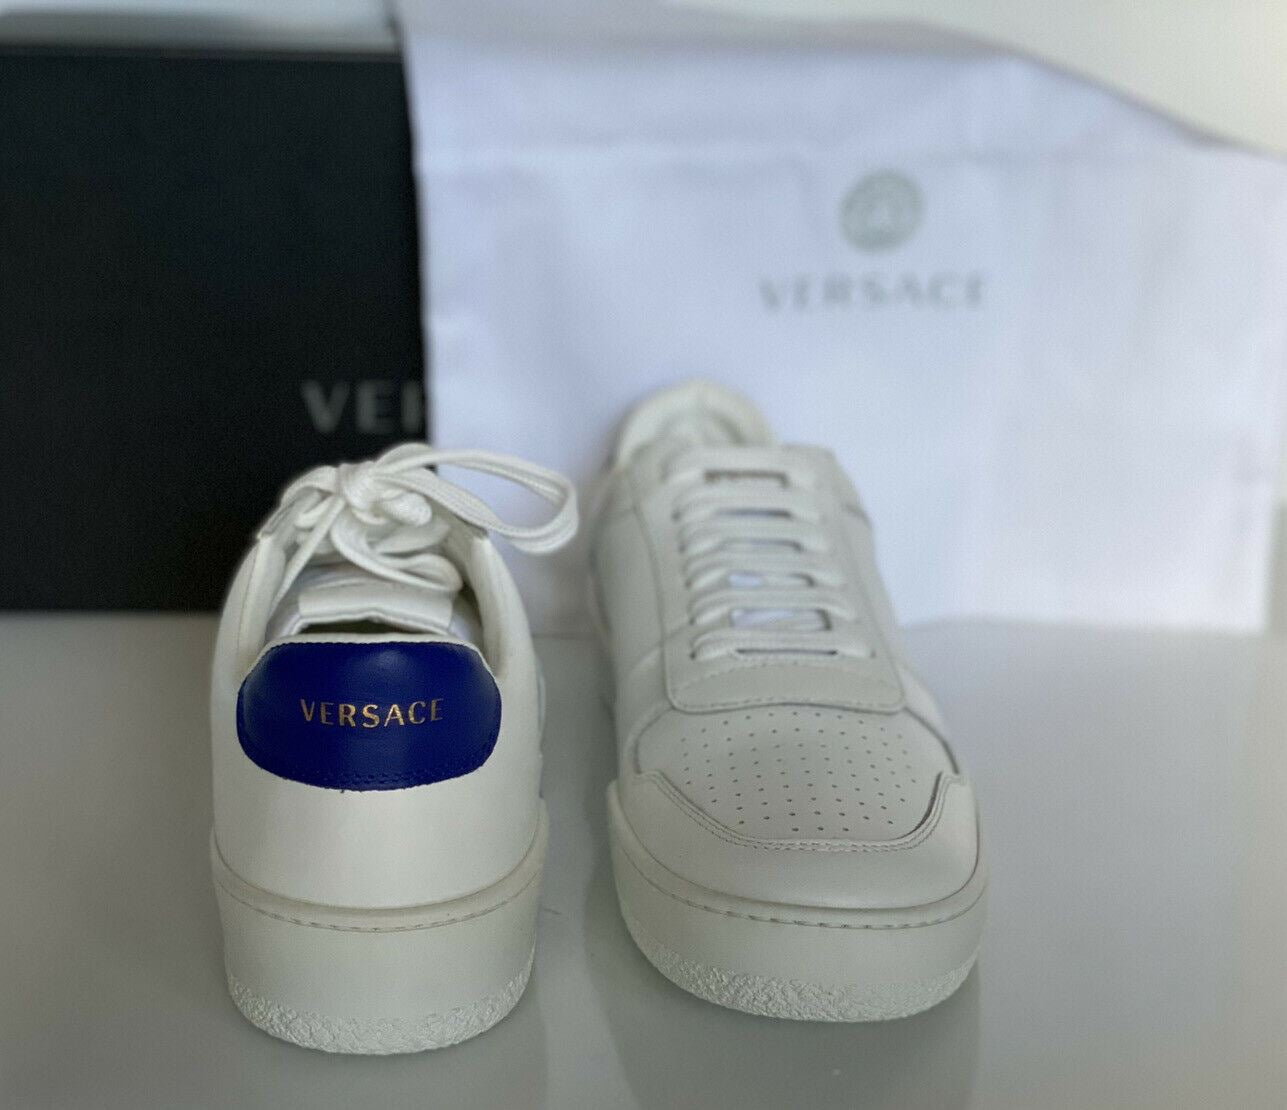 NIB 495 $ Versace Herren-Sneakers aus weißem Leder 8 US (41 Euo) Italien DSU7843 